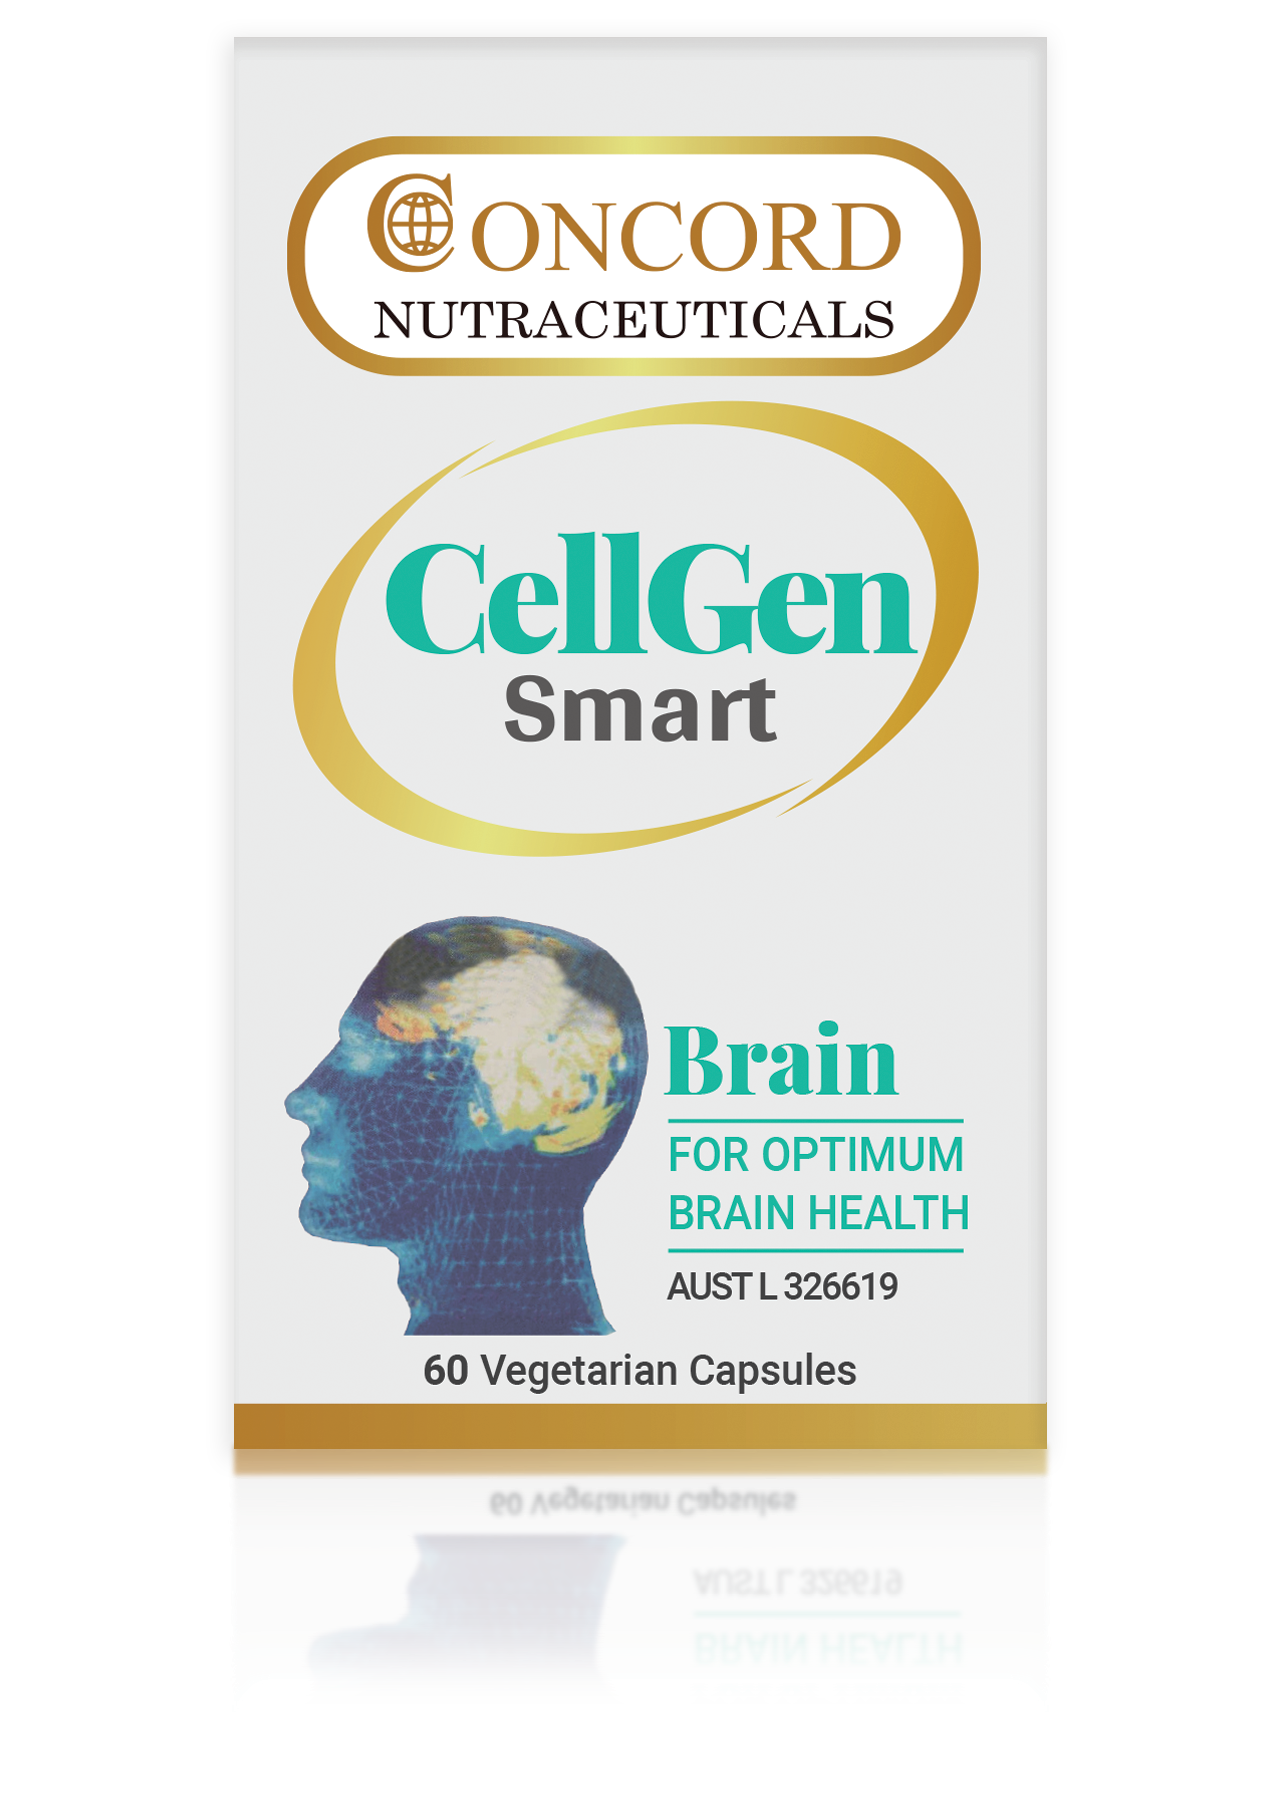 CellGen Smart - ConcordNutraceuticals